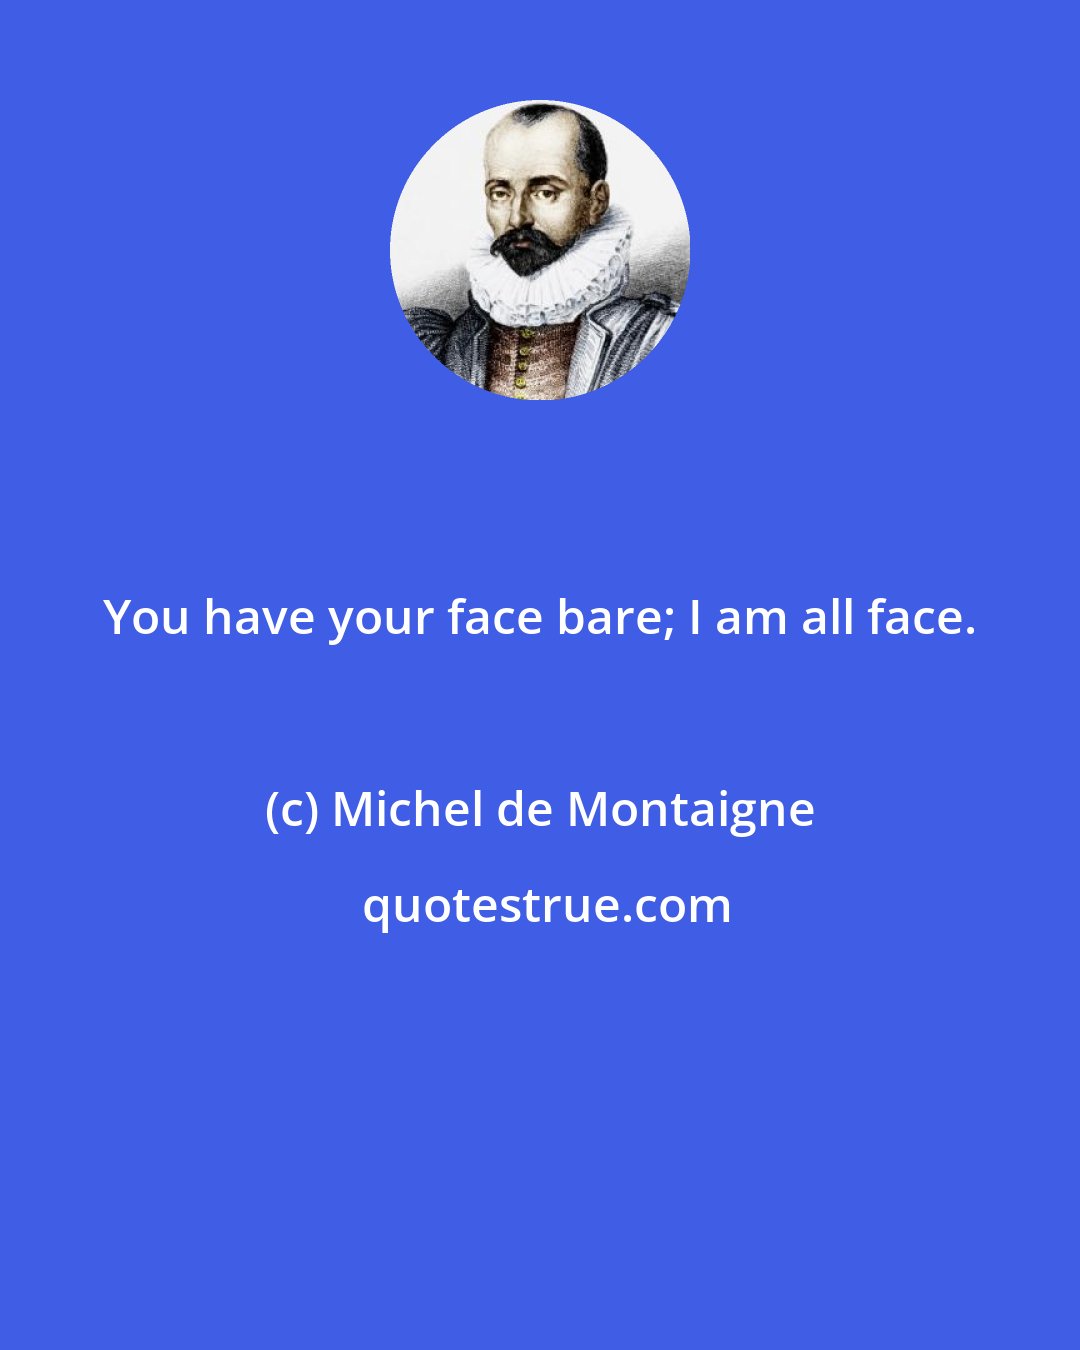 Michel de Montaigne: You have your face bare; I am all face.